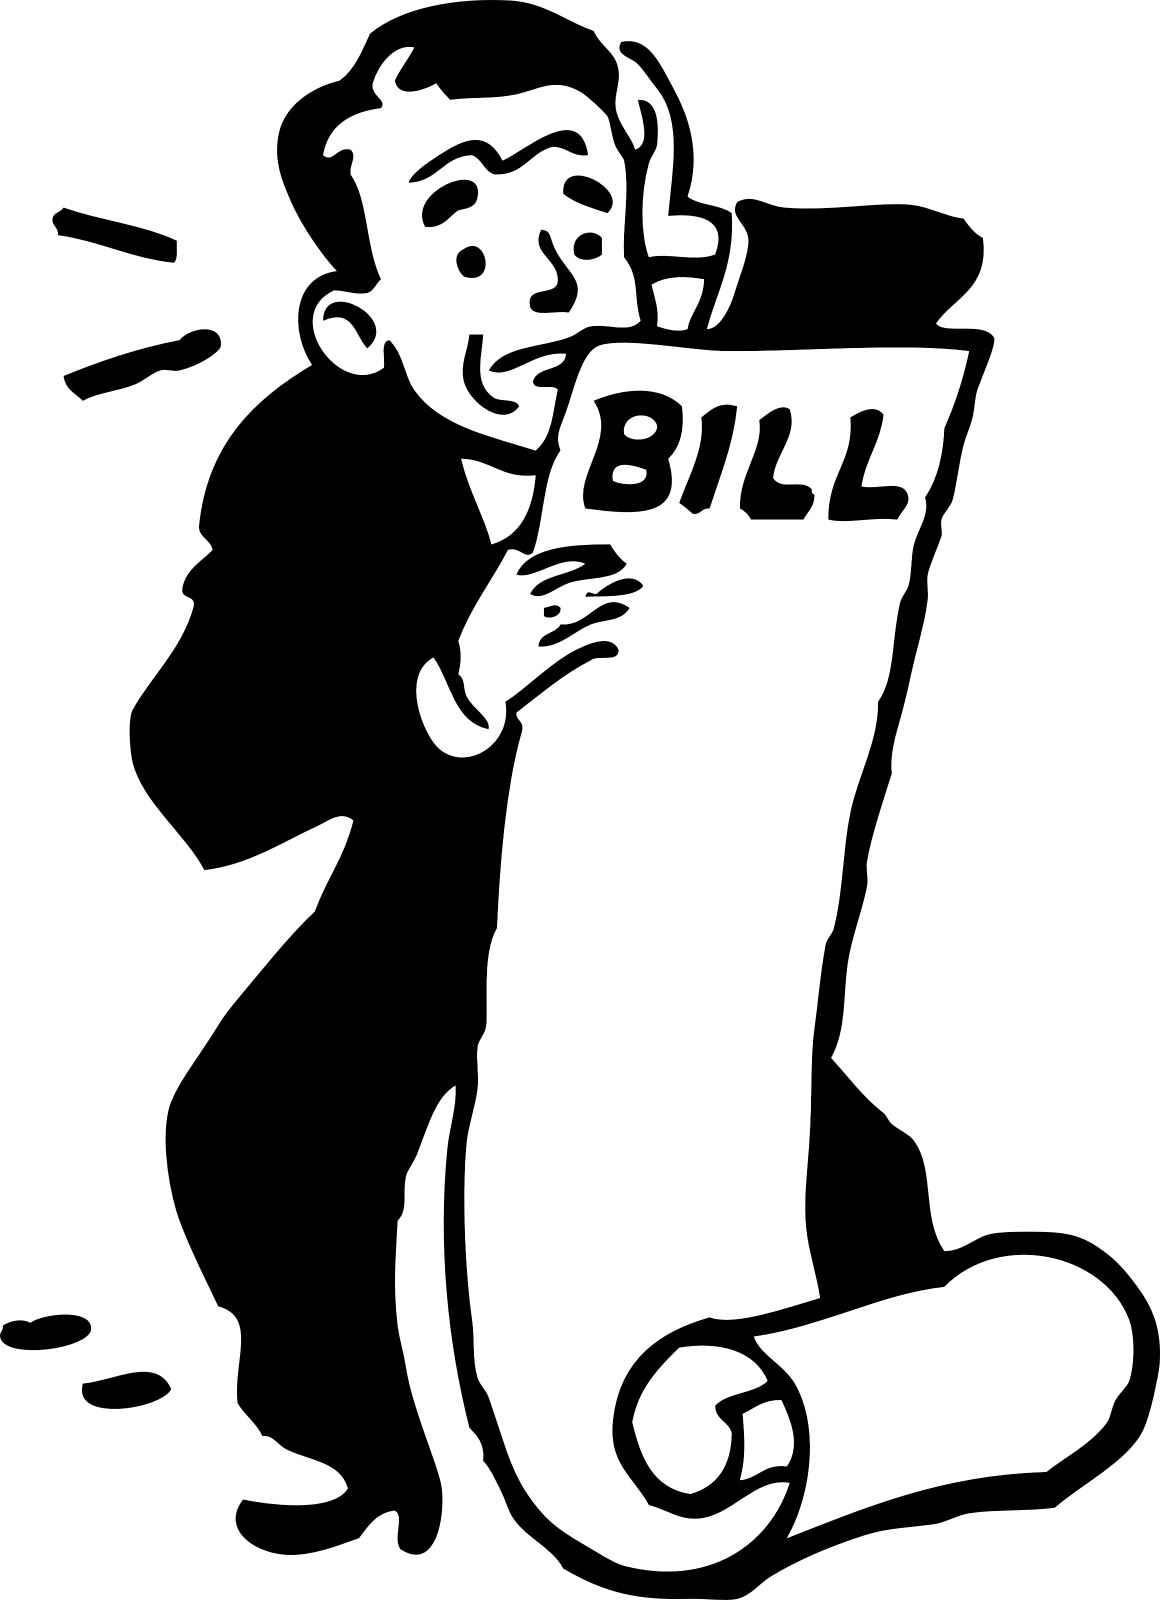 Bill clipart electricity bill. Clip art panda free